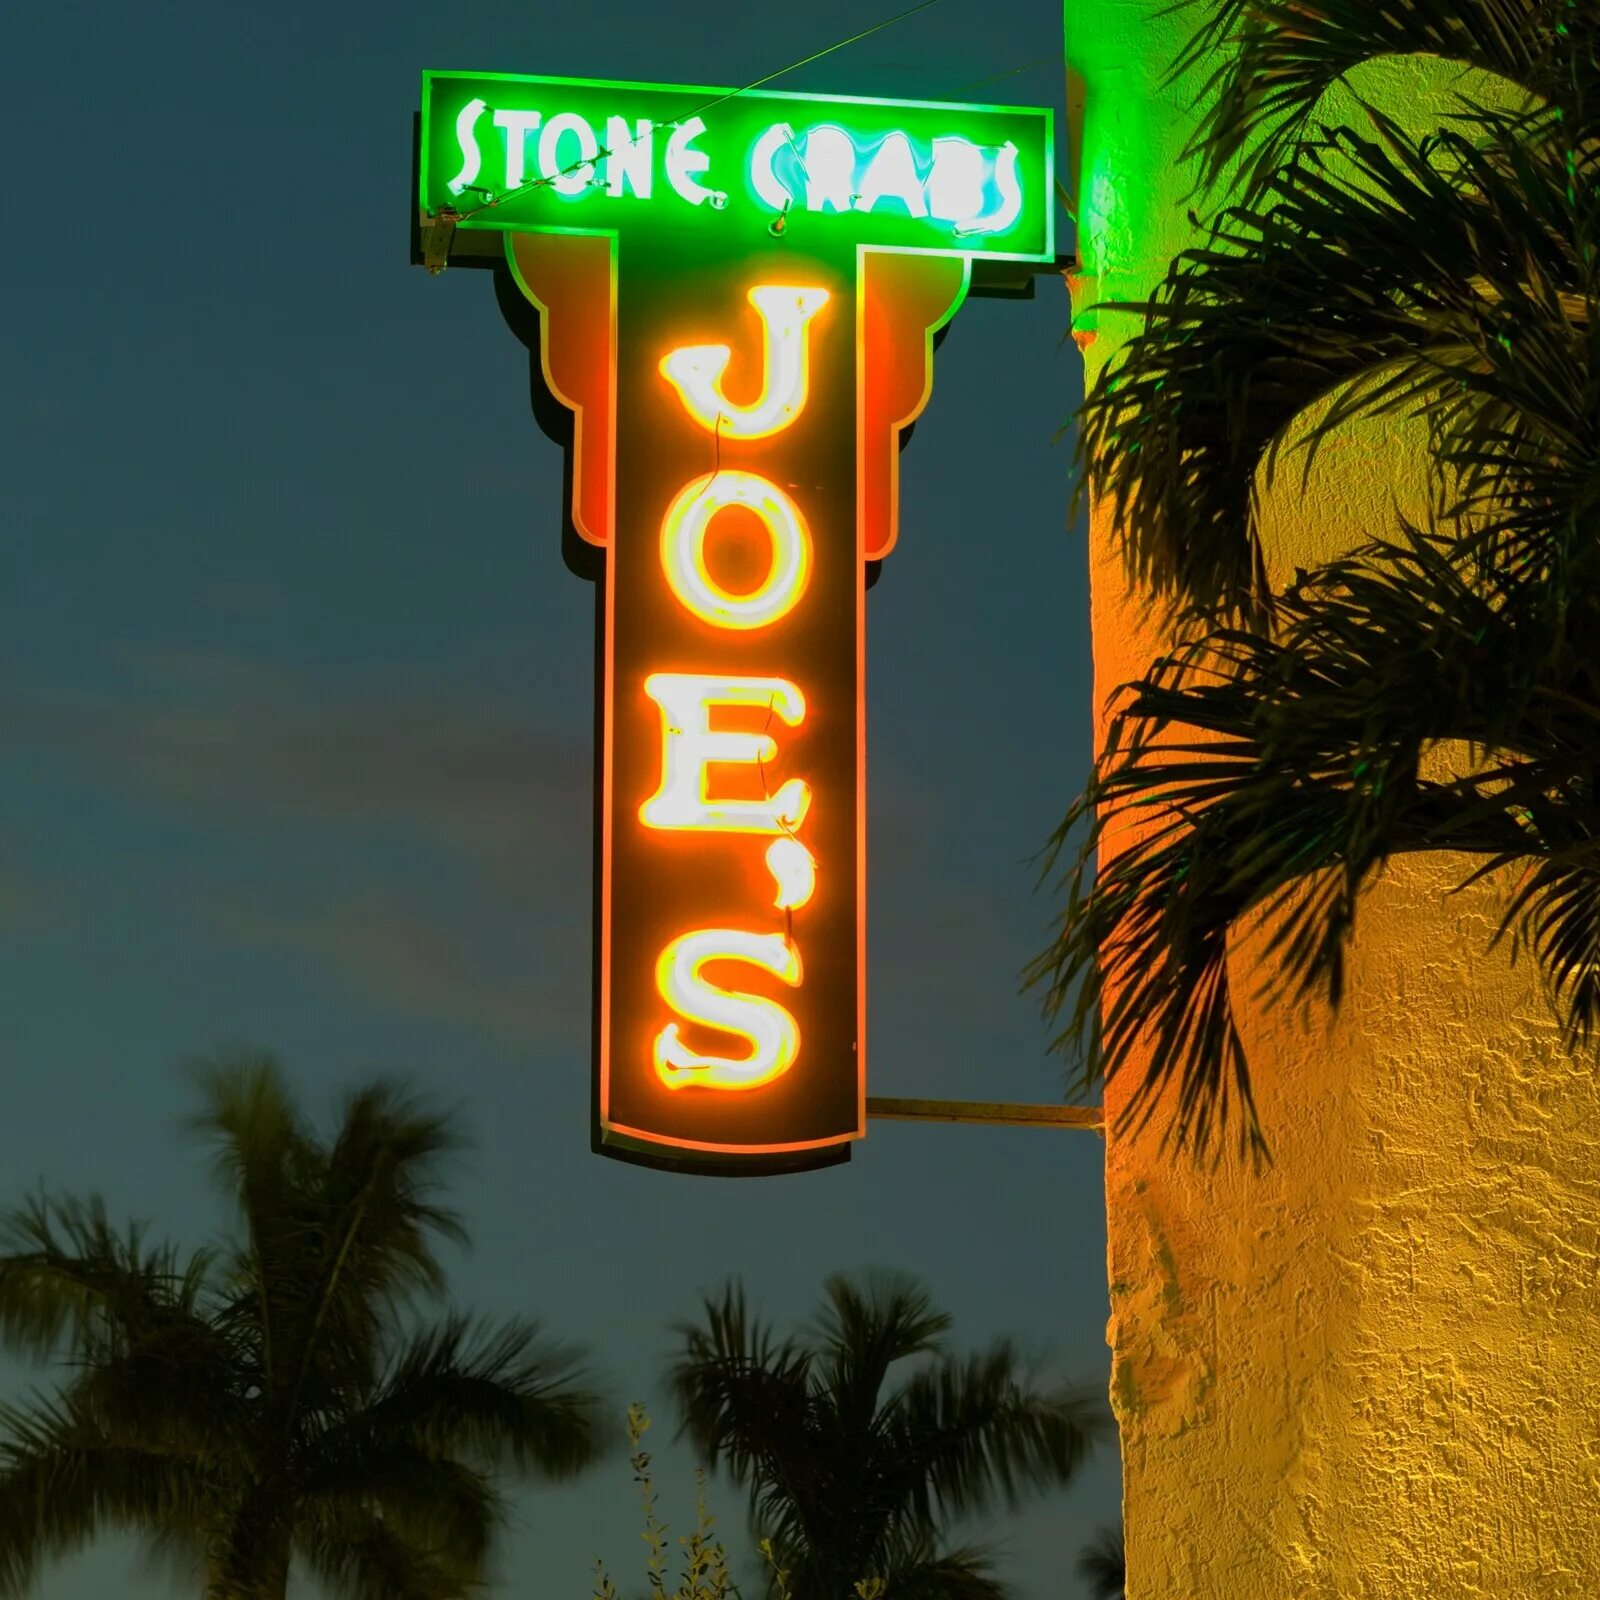 Joes stone. Joe's Майами. Joes Crab Miami. Ресторан в Маями Бич Joe's Stone Crab. Майами Бич надпись.